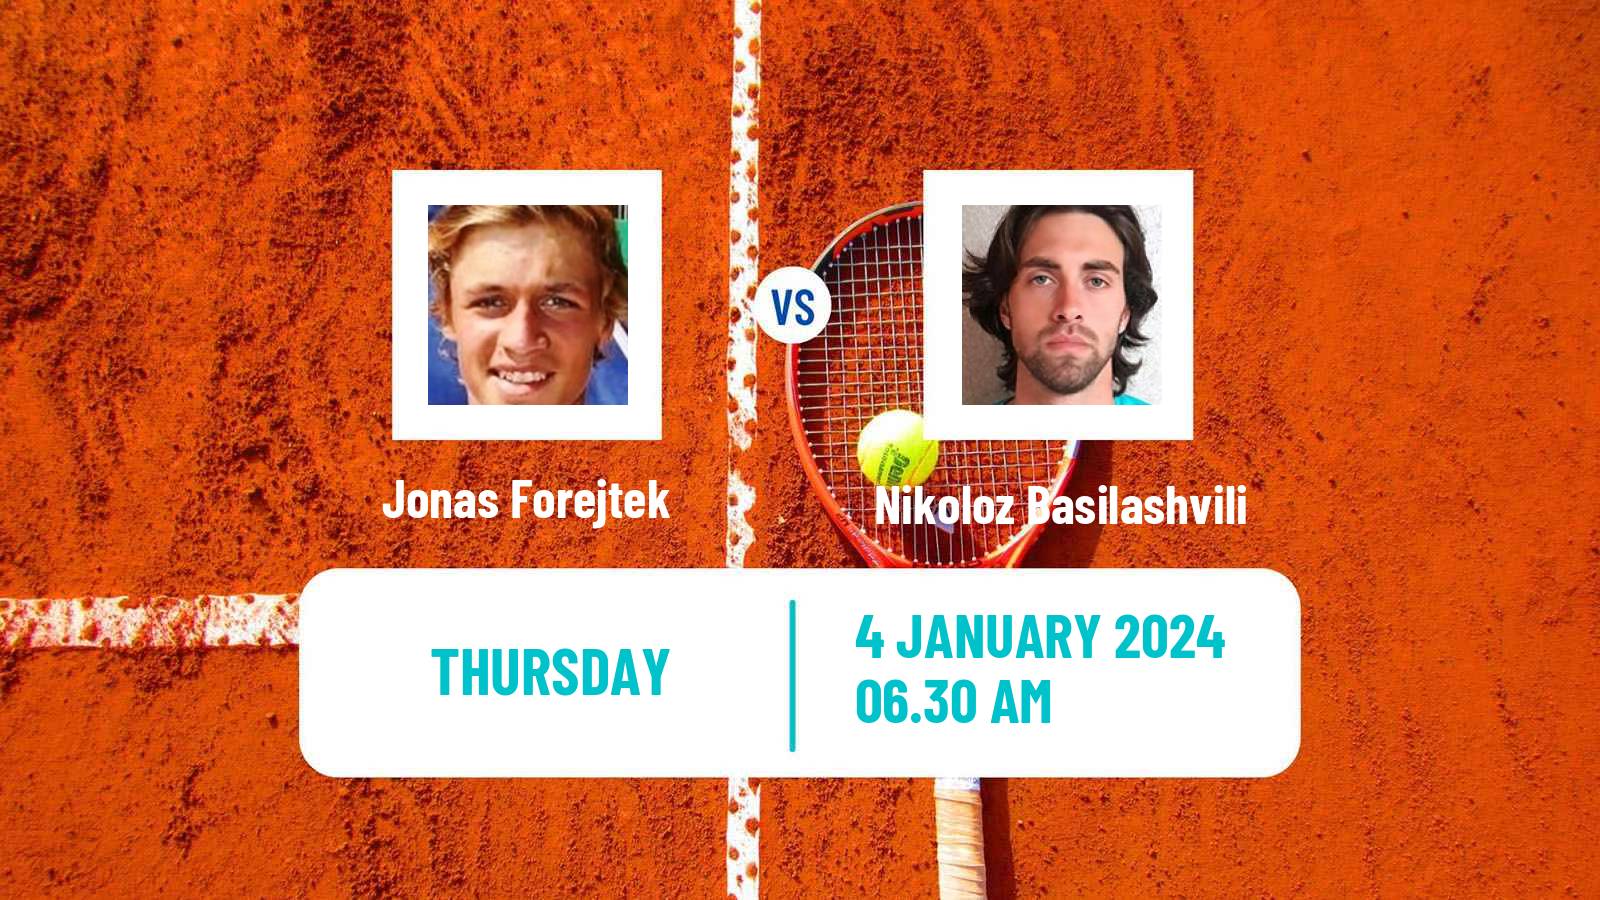 Tennis ITF M25 Esch Alzette Men Jonas Forejtek - Nikoloz Basilashvili